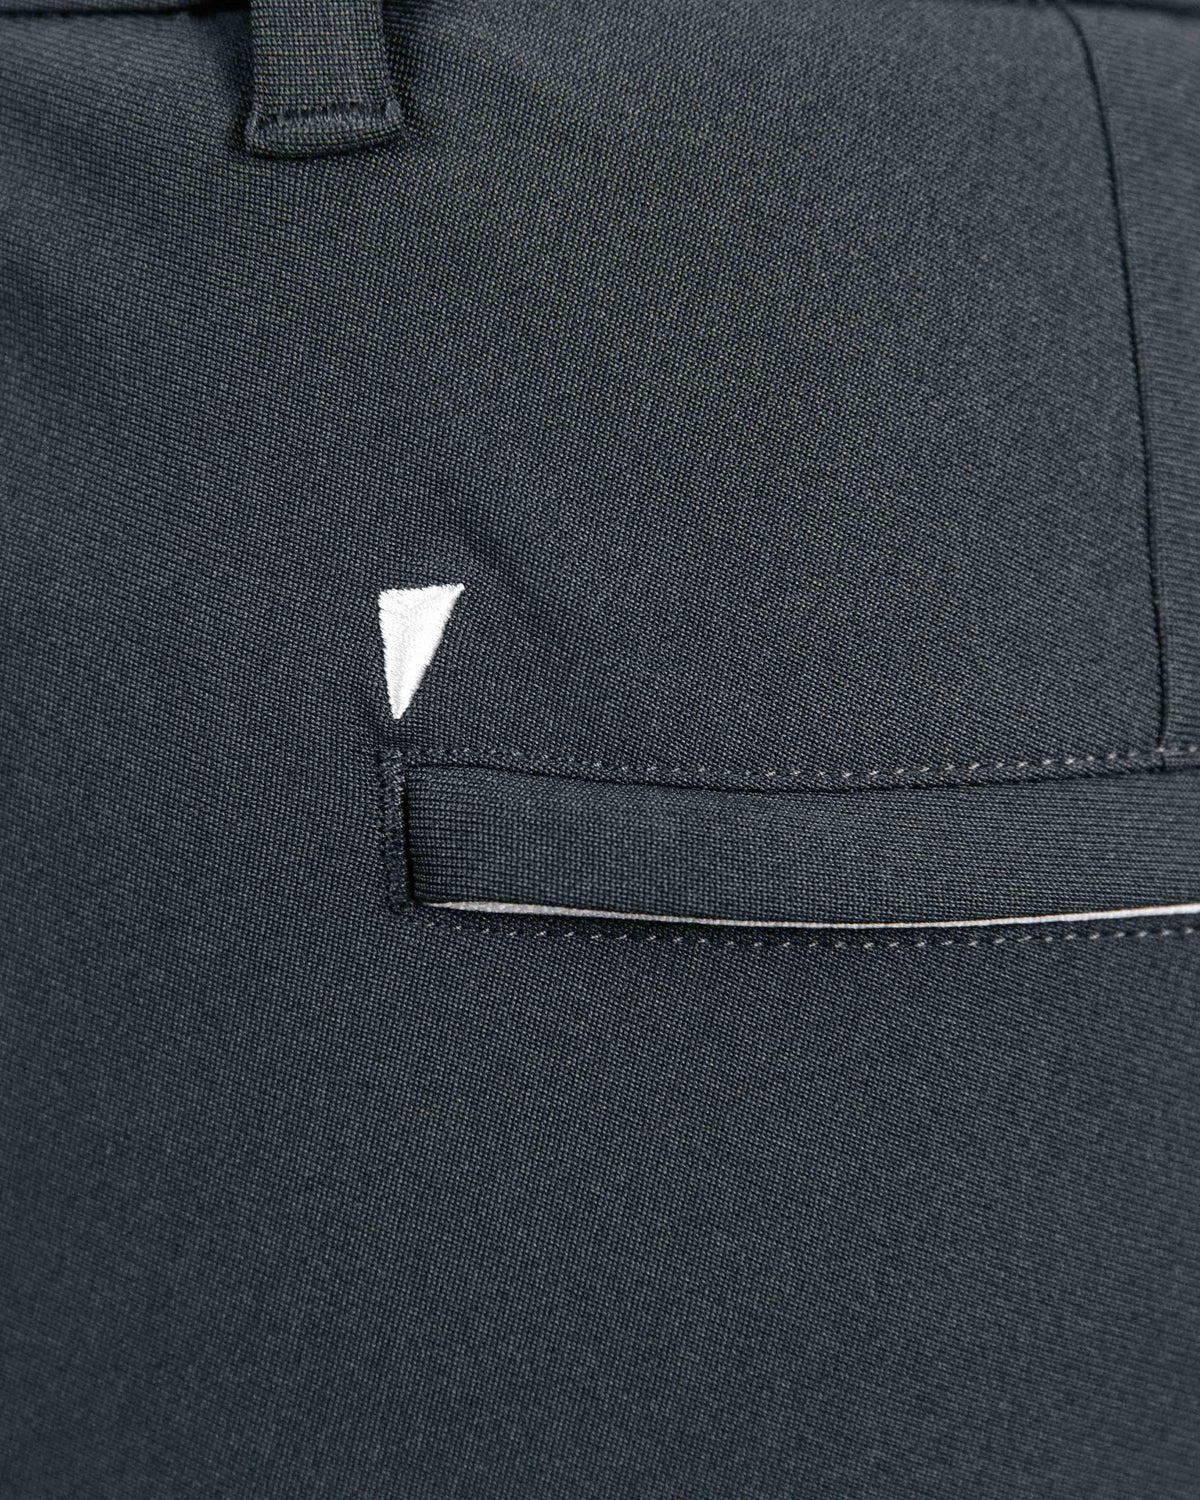 Primo Golf Dark Gray Traditional Pants  primo logo above back pocket.